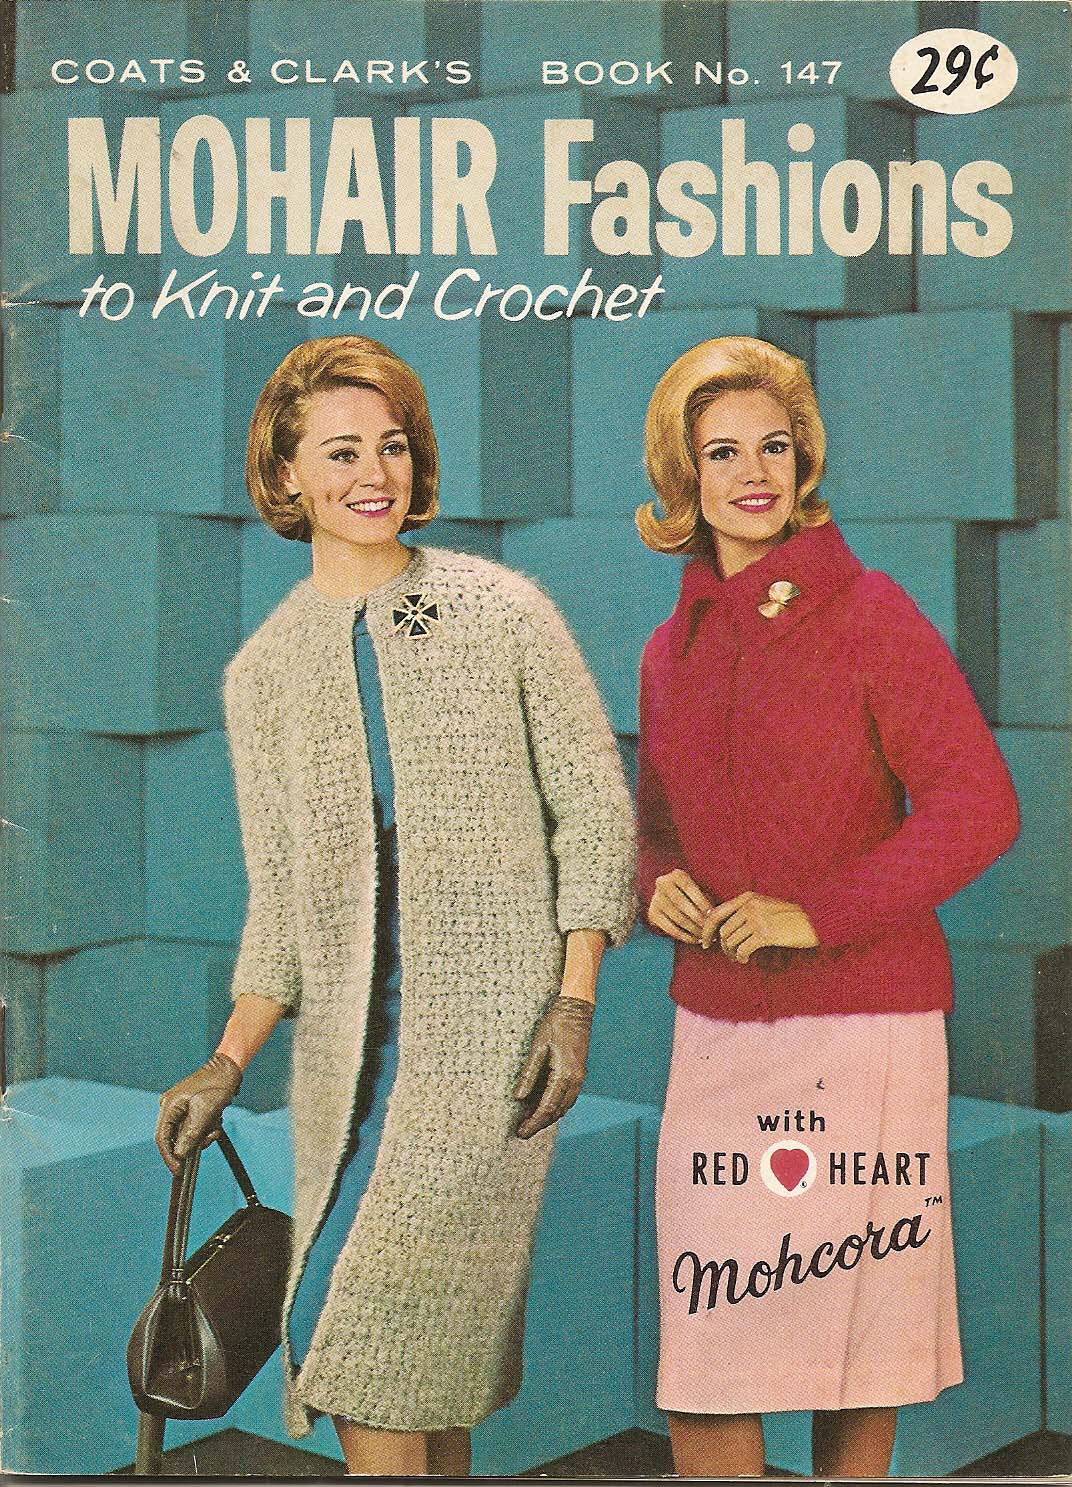 Vintage Knit Crochet Shop Talk Knitting Crochet Patterns